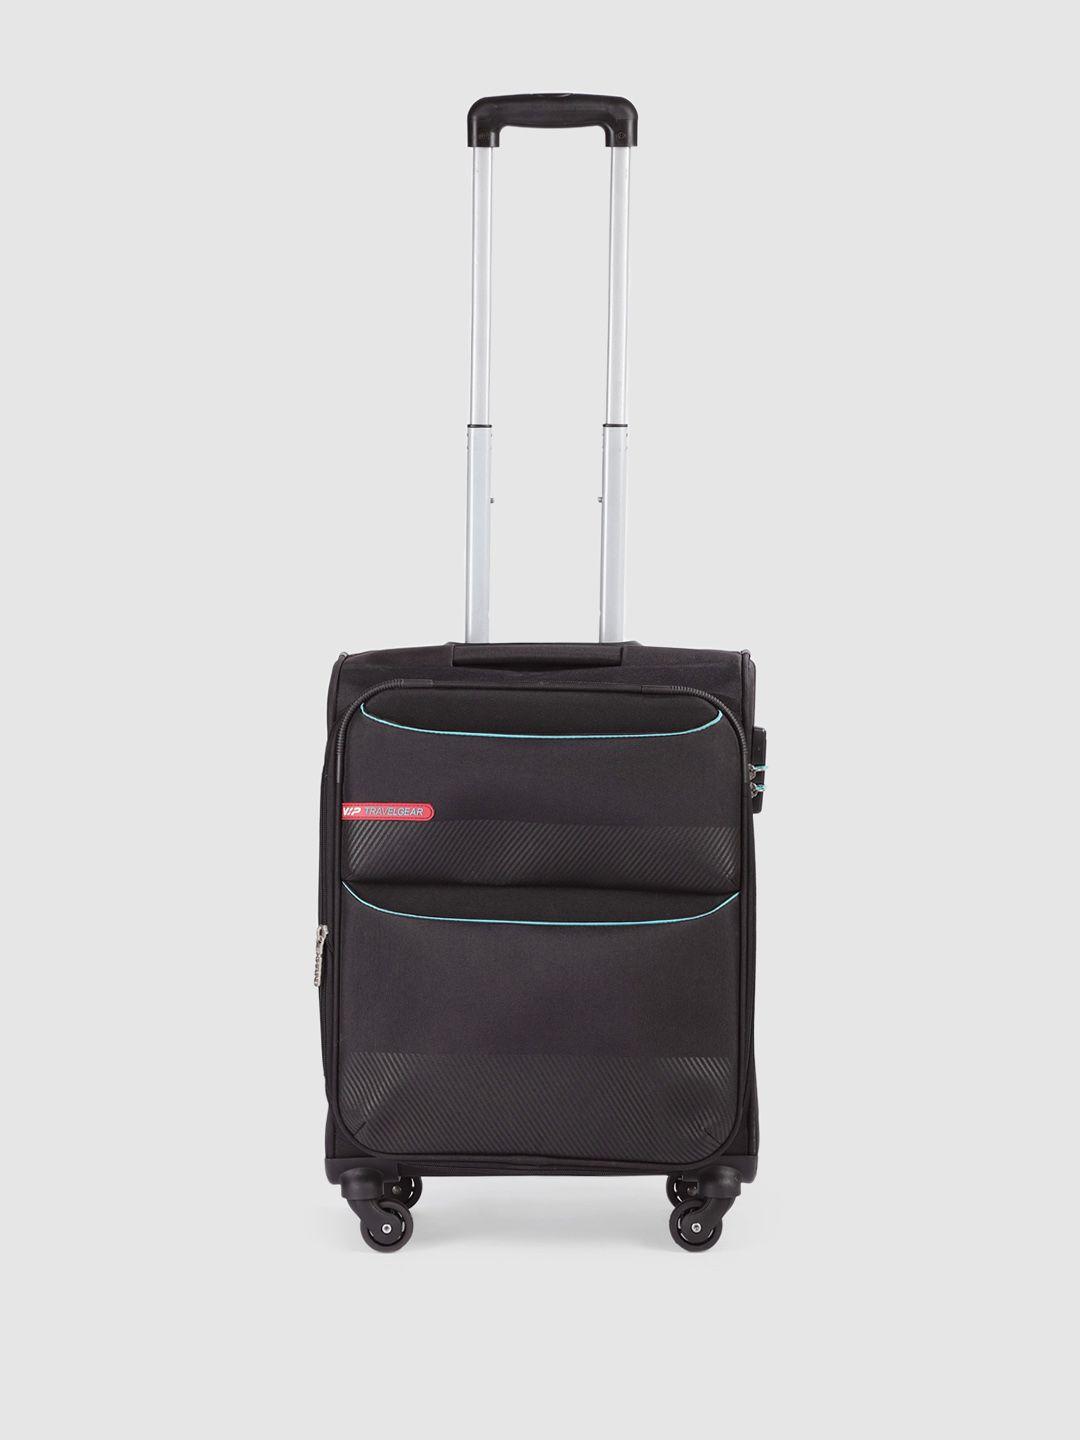 vip essencia soft cabin trolley suitcase